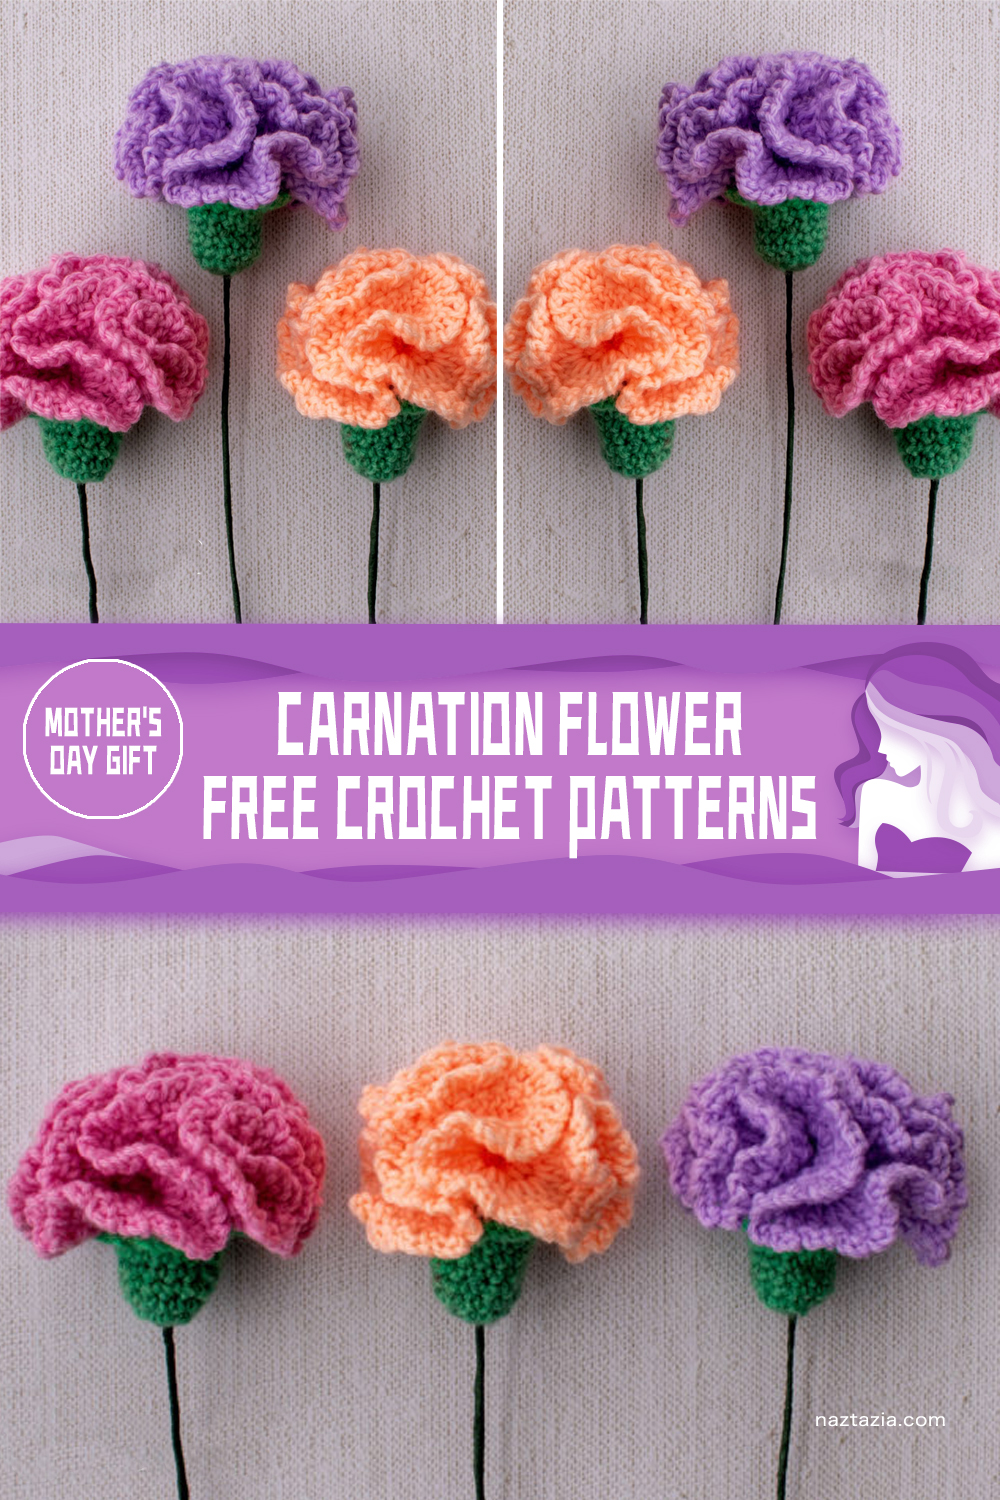 FREE Carnation Flower Crochet Patterns